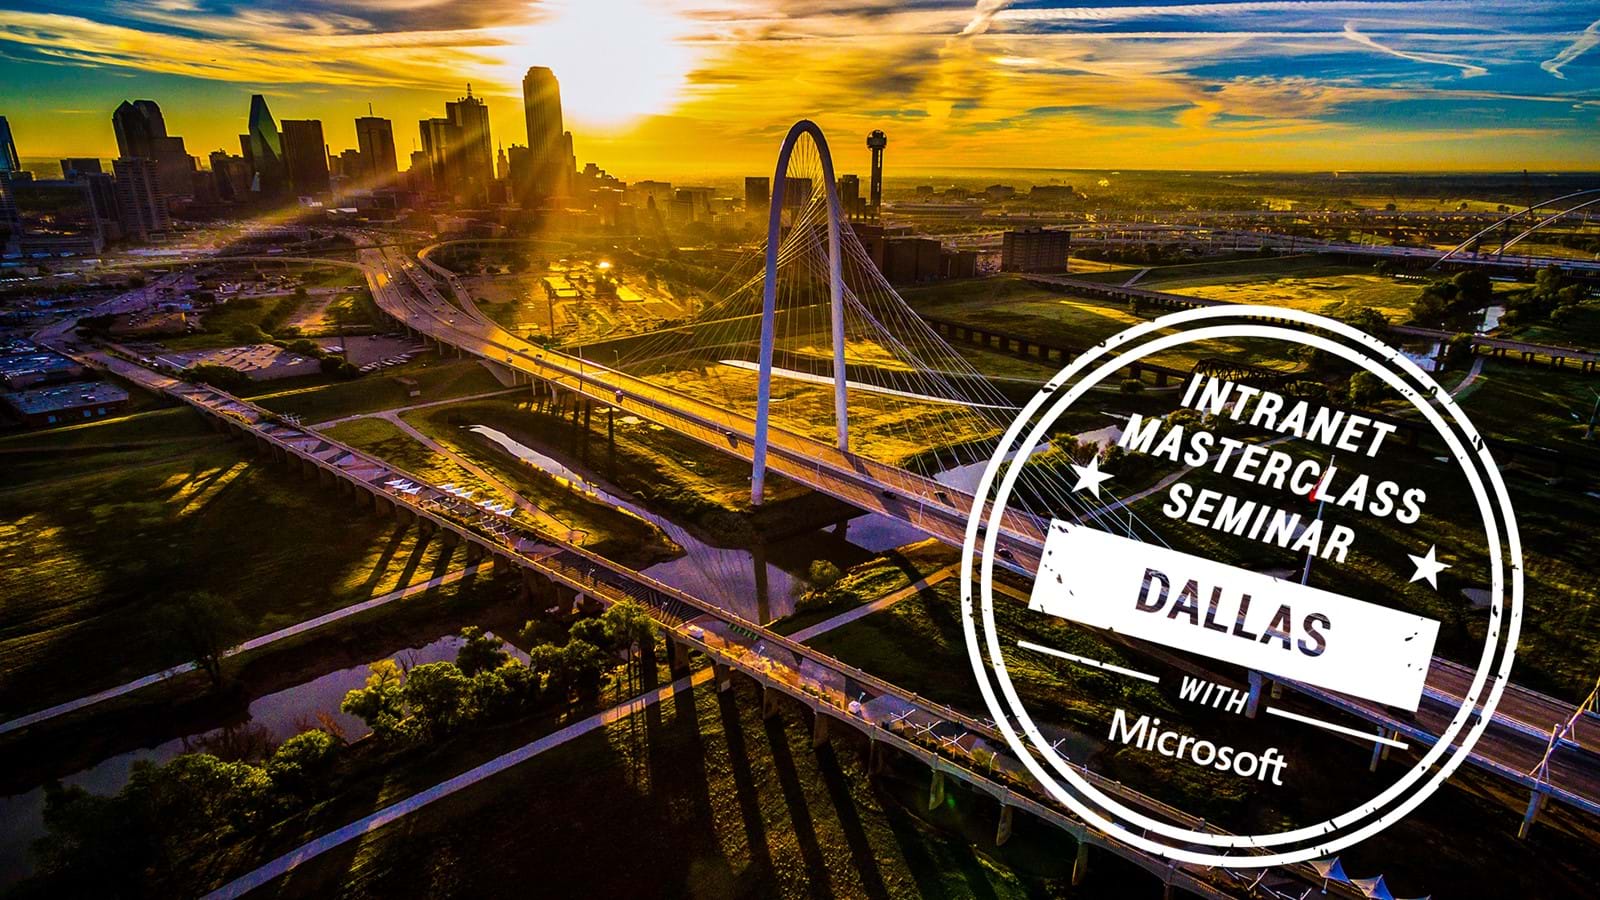 Dallas skyline for intranet seminar event